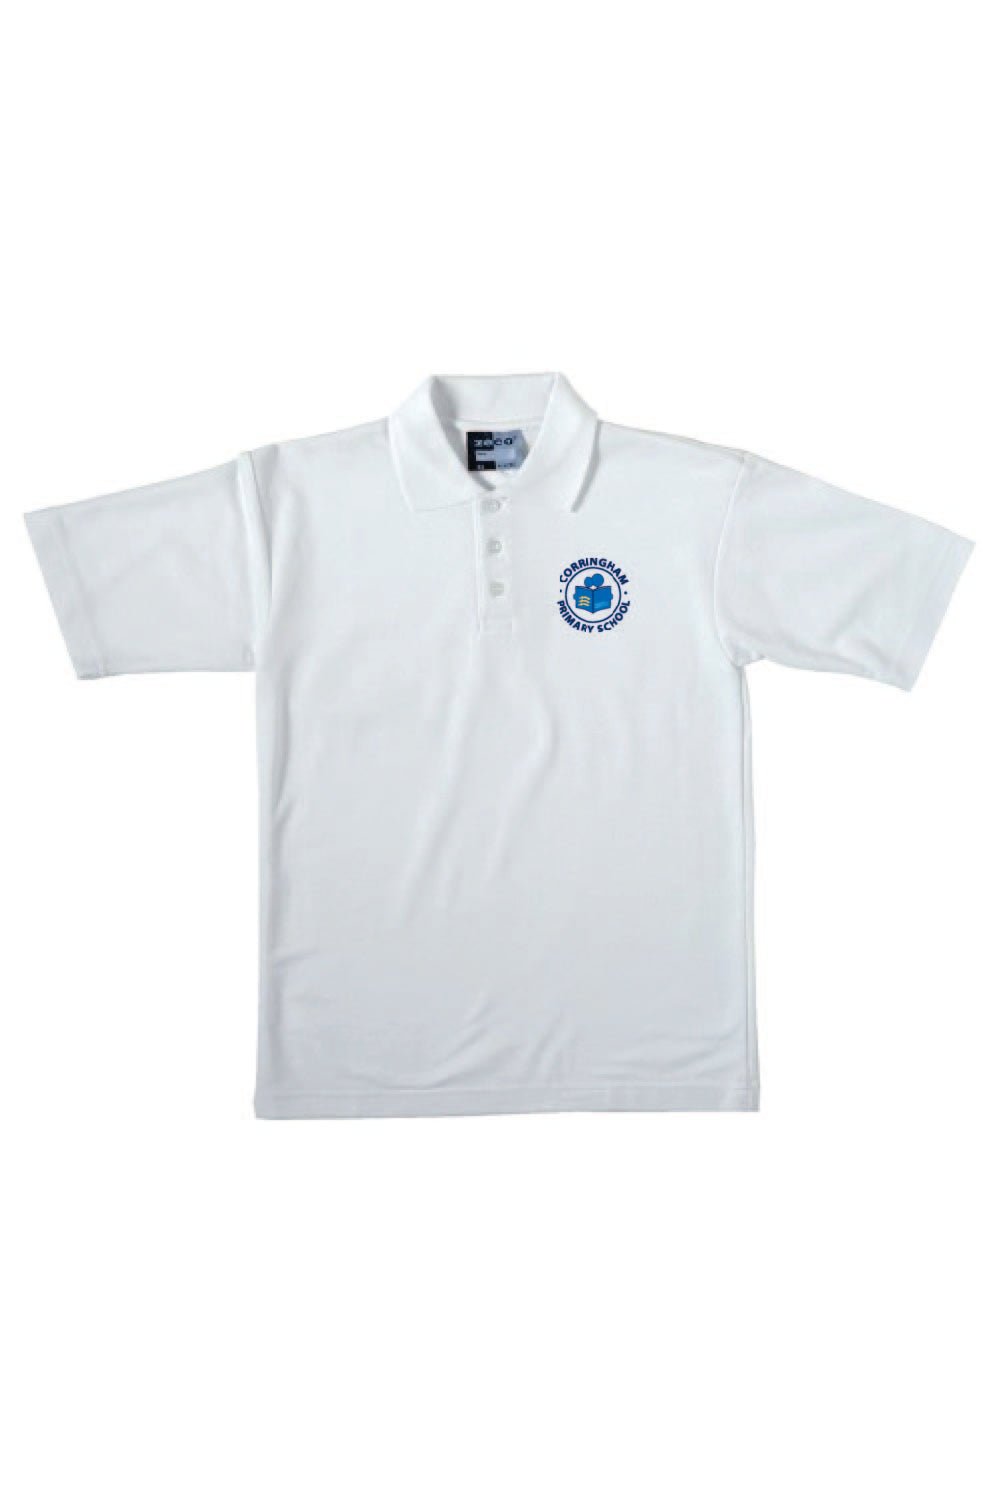 Corringham Primary White Nursery Polo Shirt - Uniformwise Schoolwear